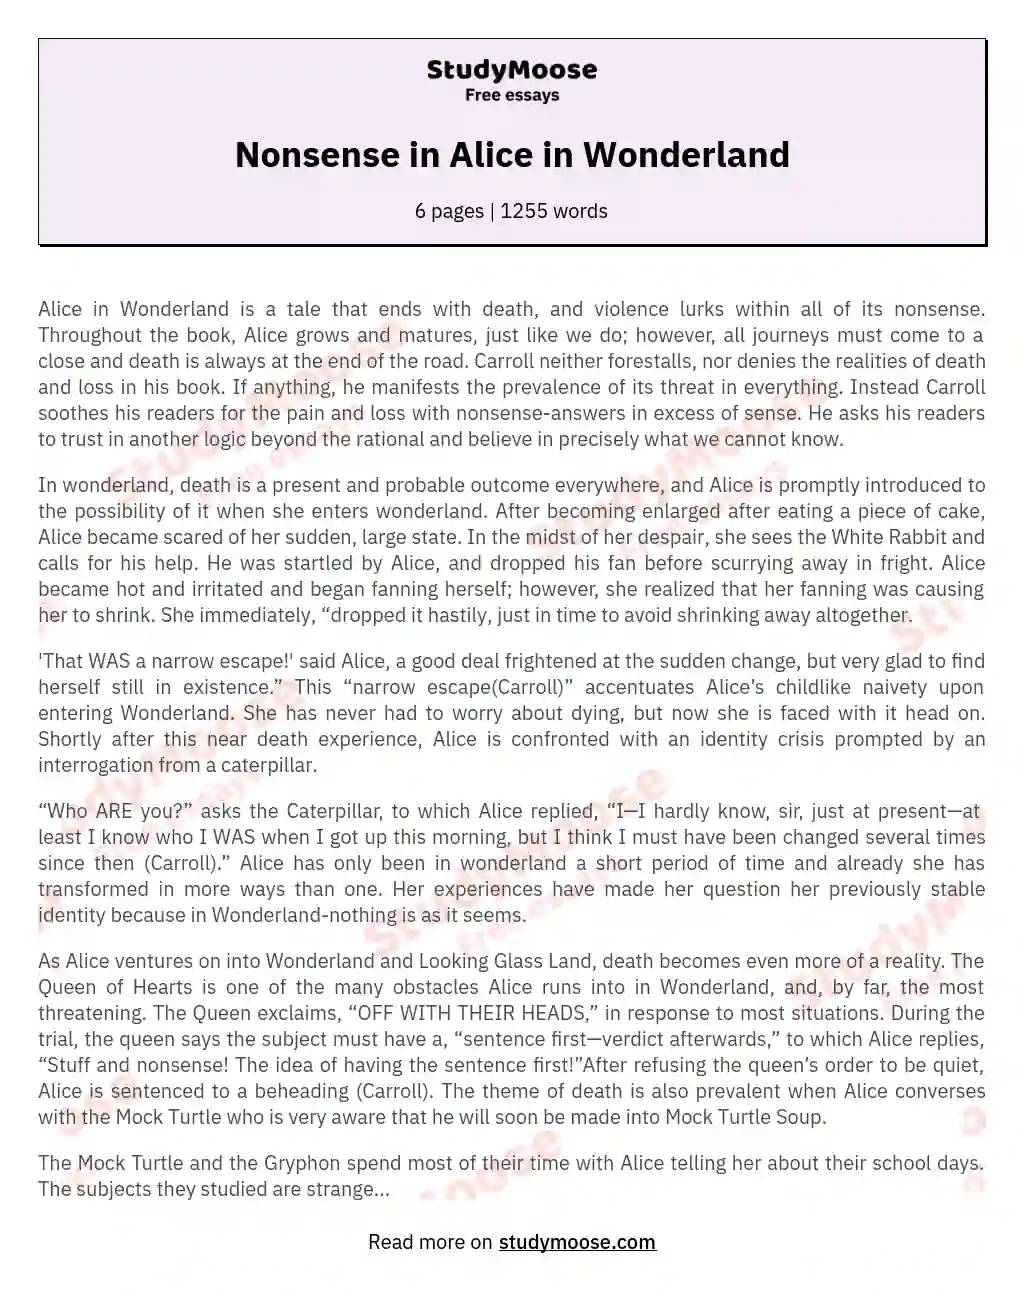 Nonsense in Alice in Wonderland